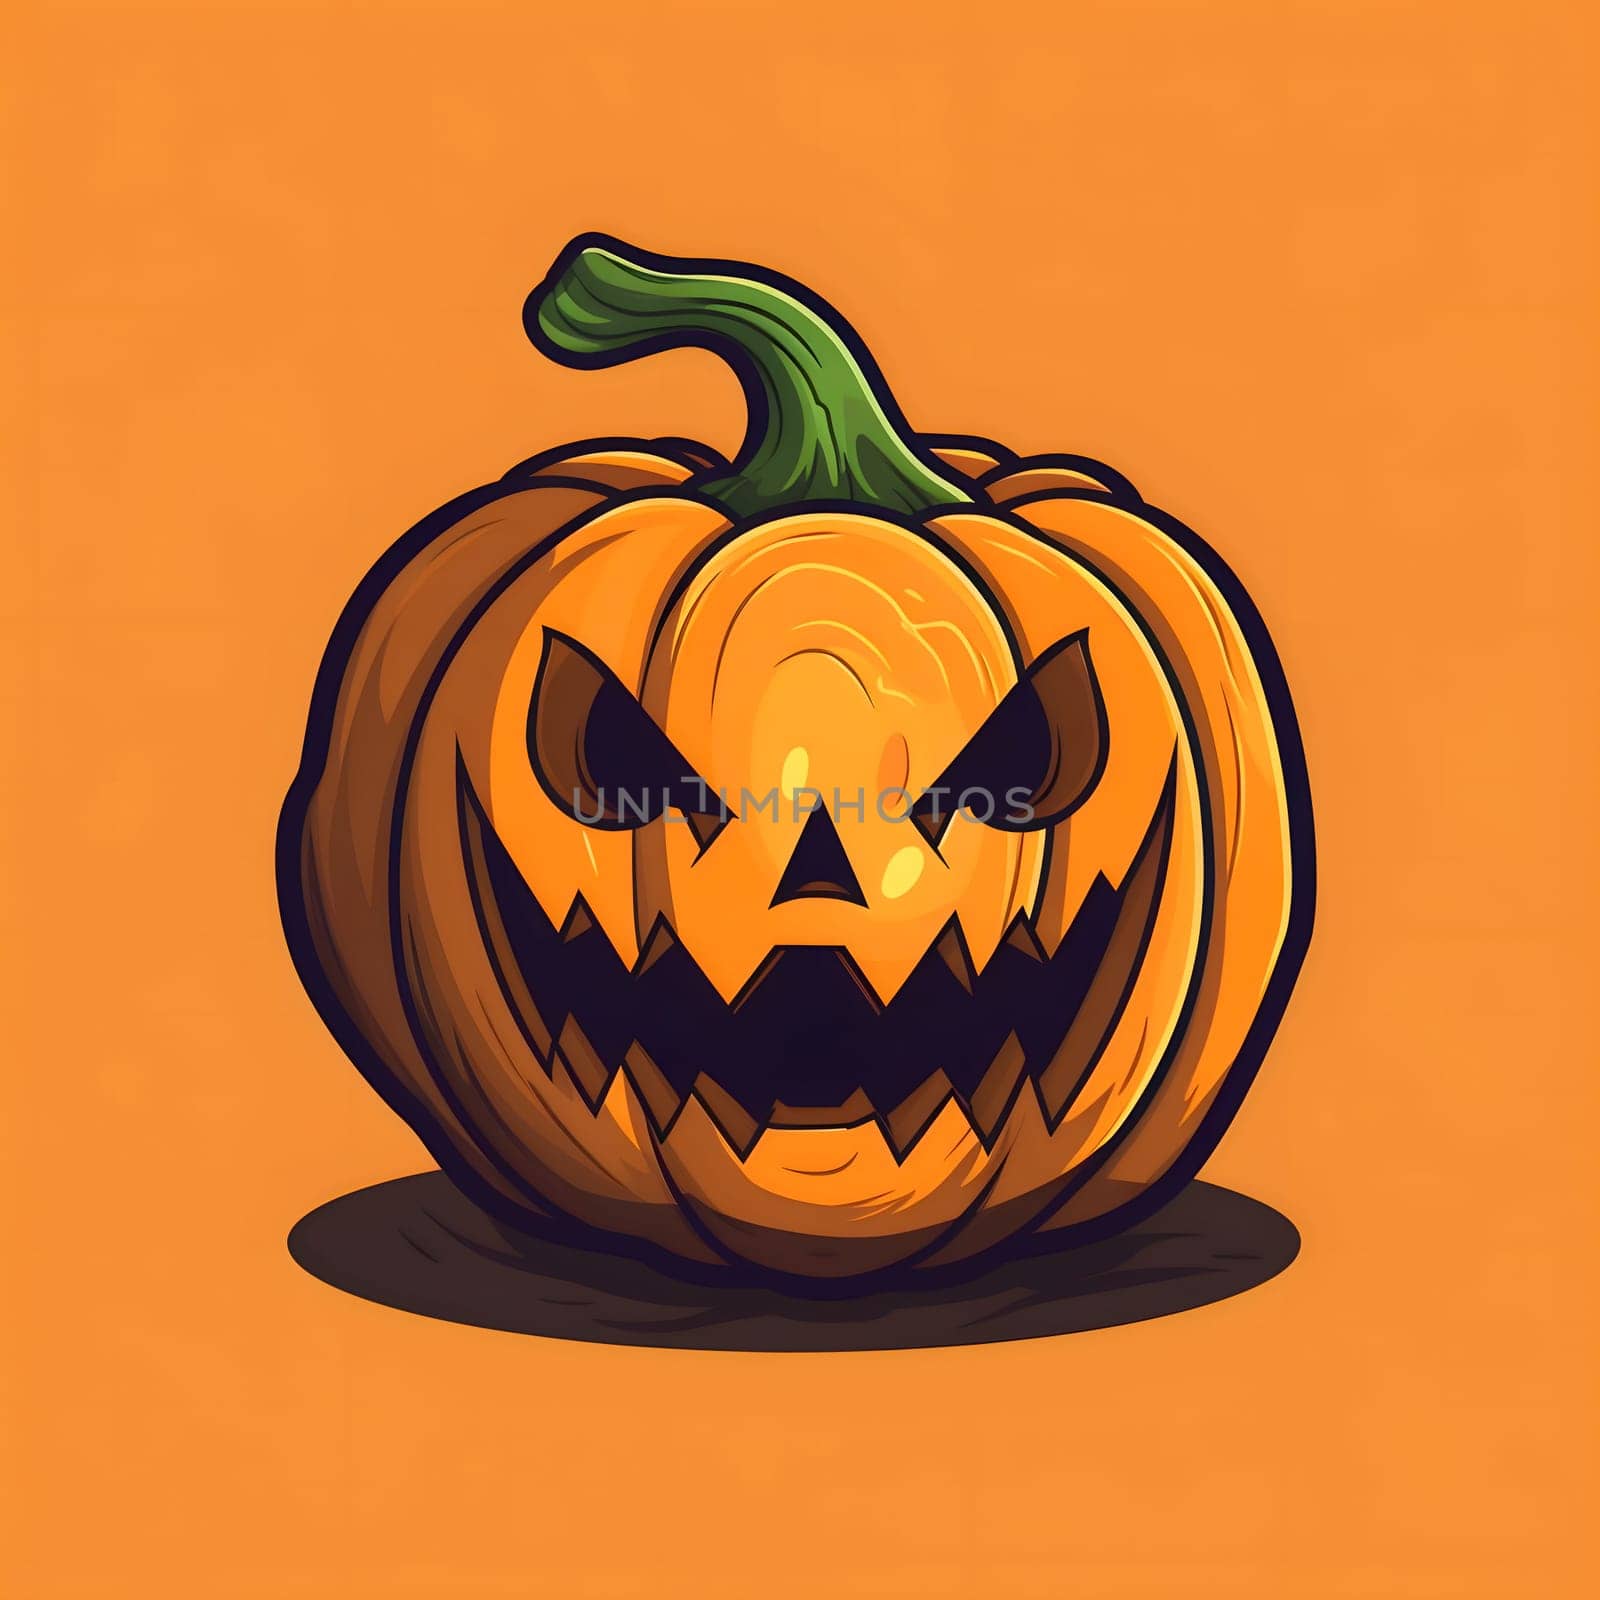 Jack-o-lantern pumpkin, Halloween image on an orange isolated background. by ThemesS